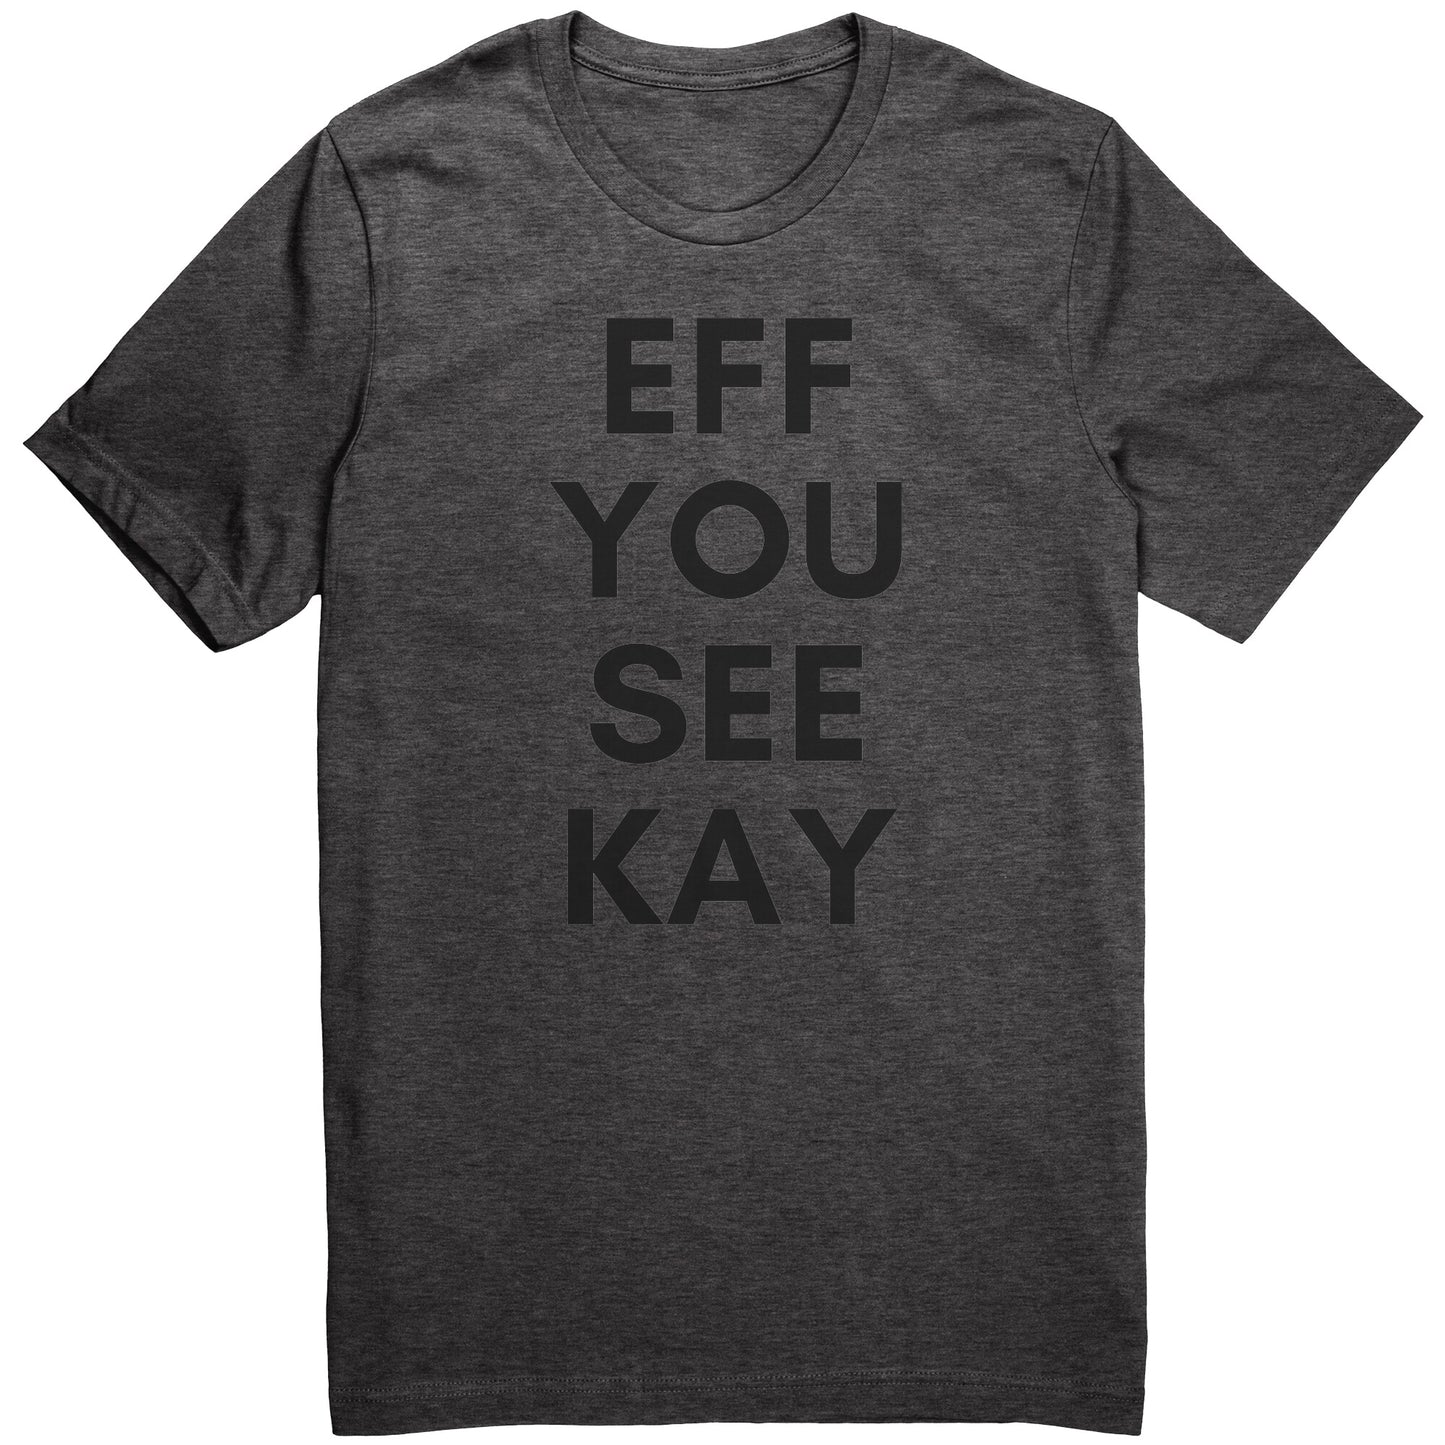 Eff You See Kay Tee